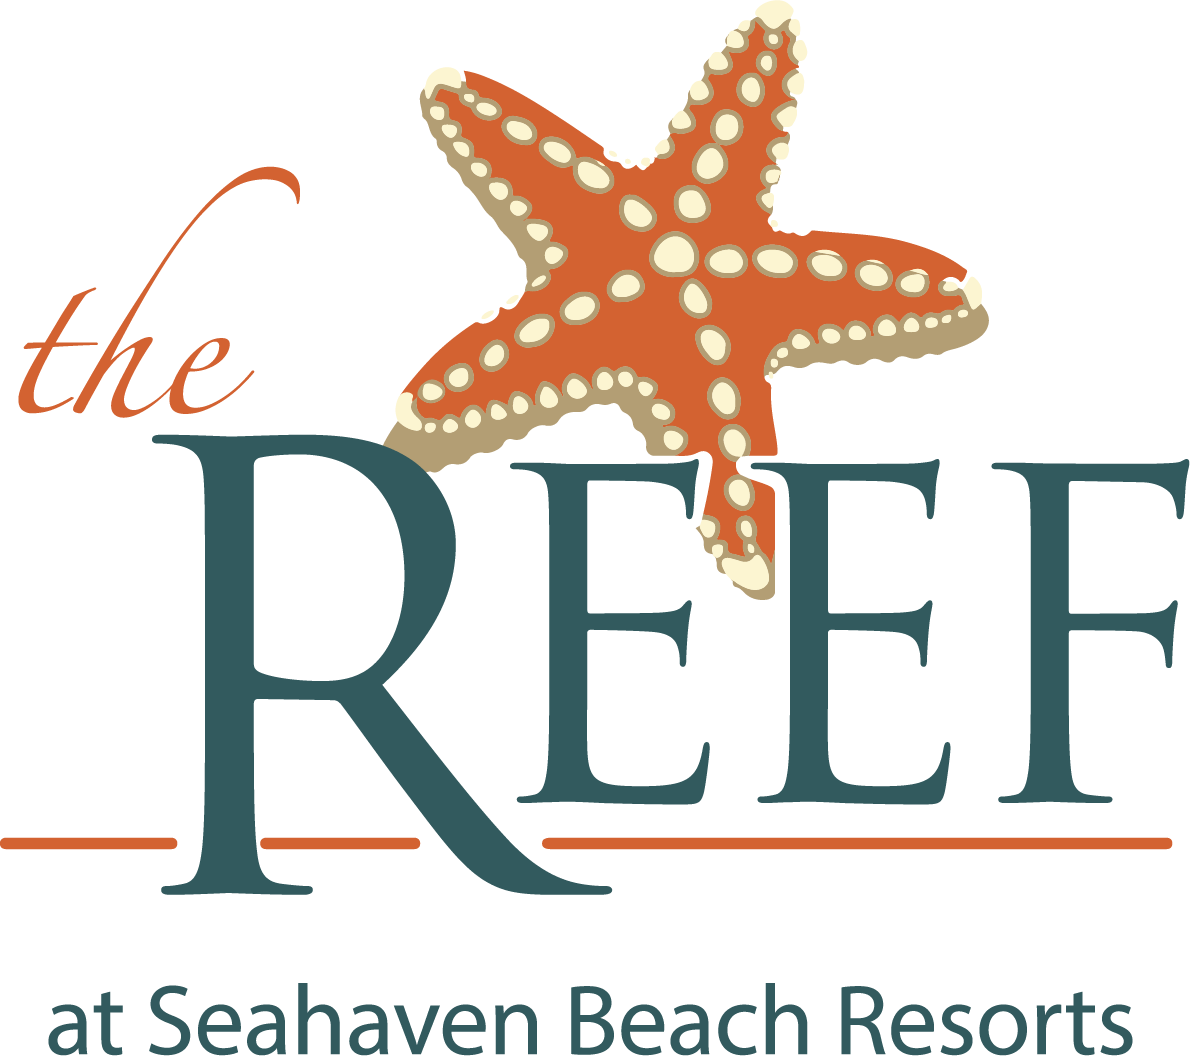 reef-hotel_logo-outlines